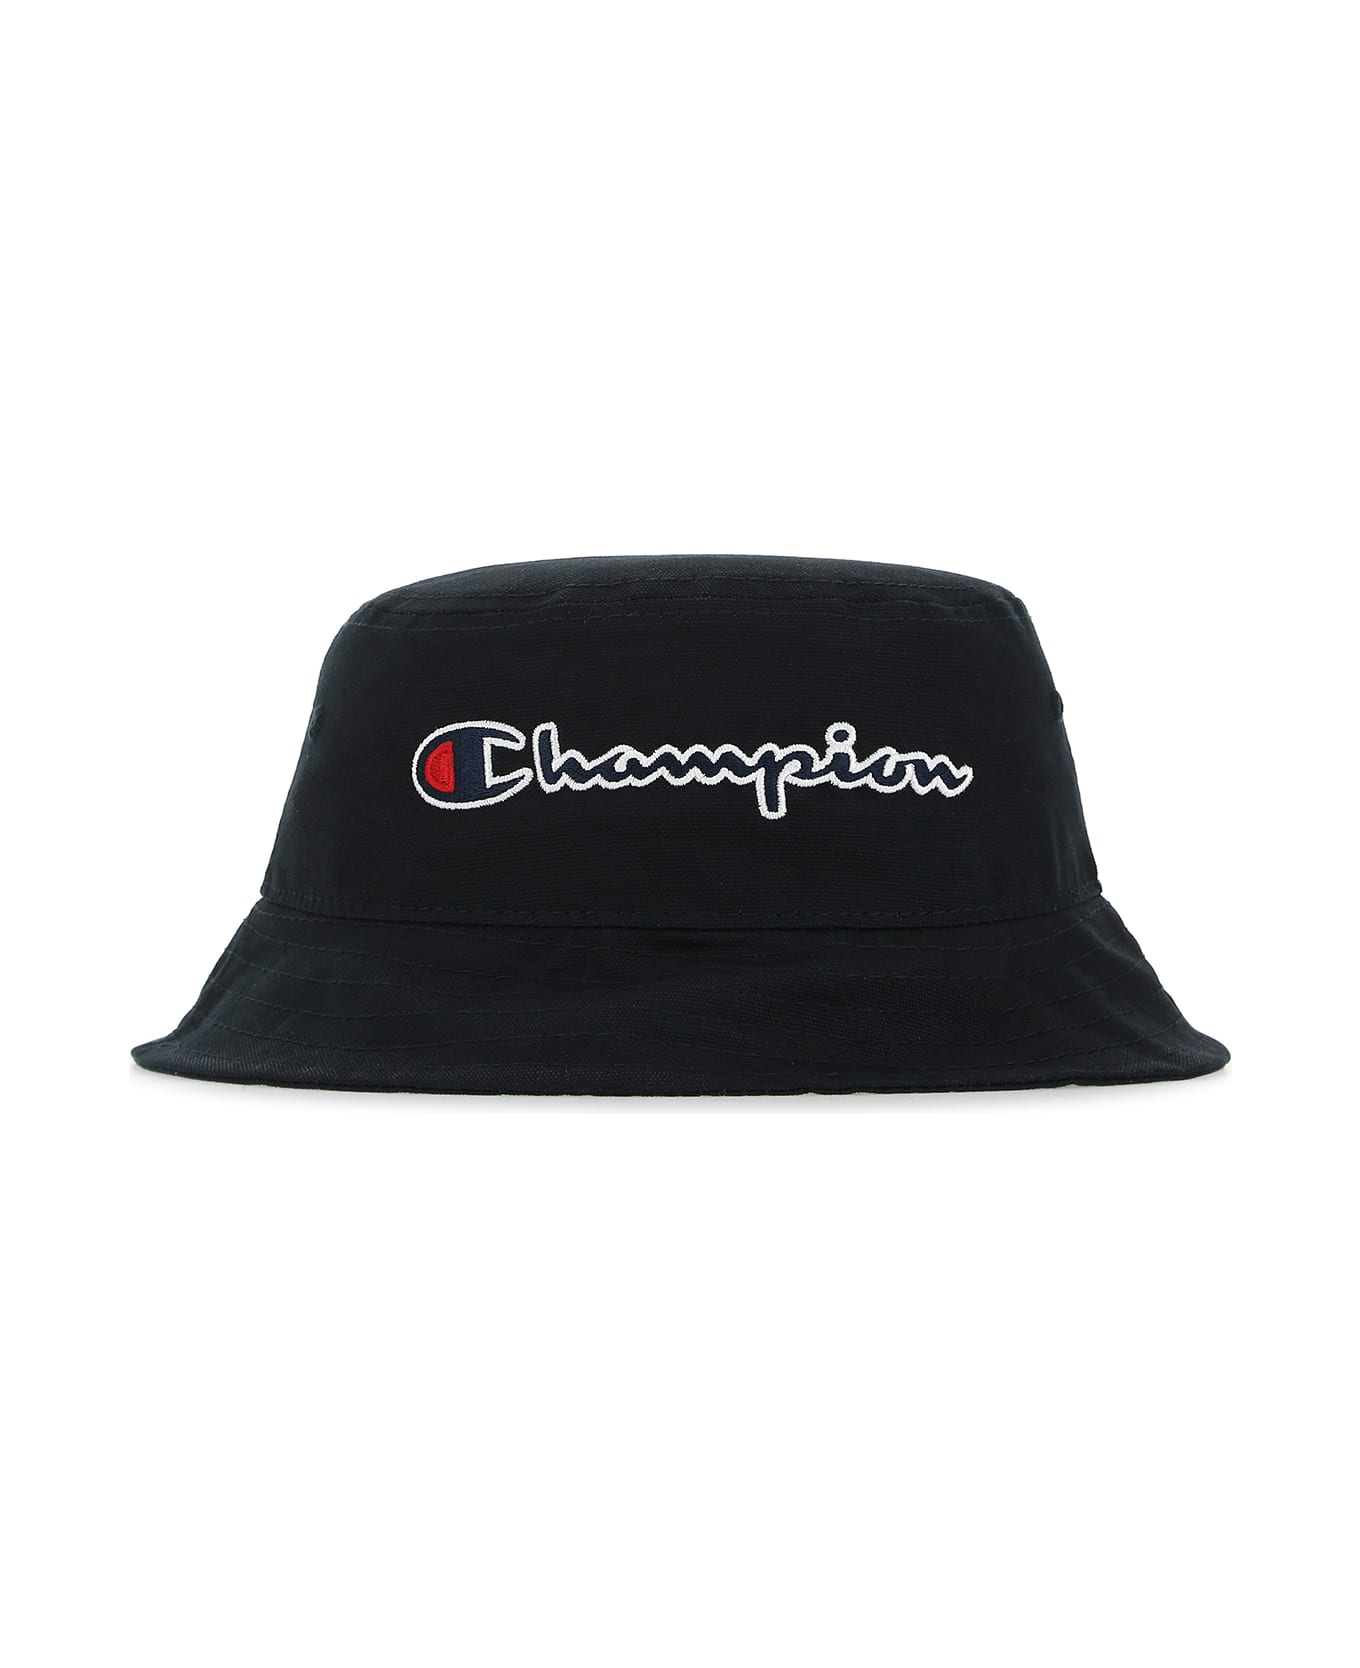 Champion Black Cotton Bucket Hat - KK001 帽子